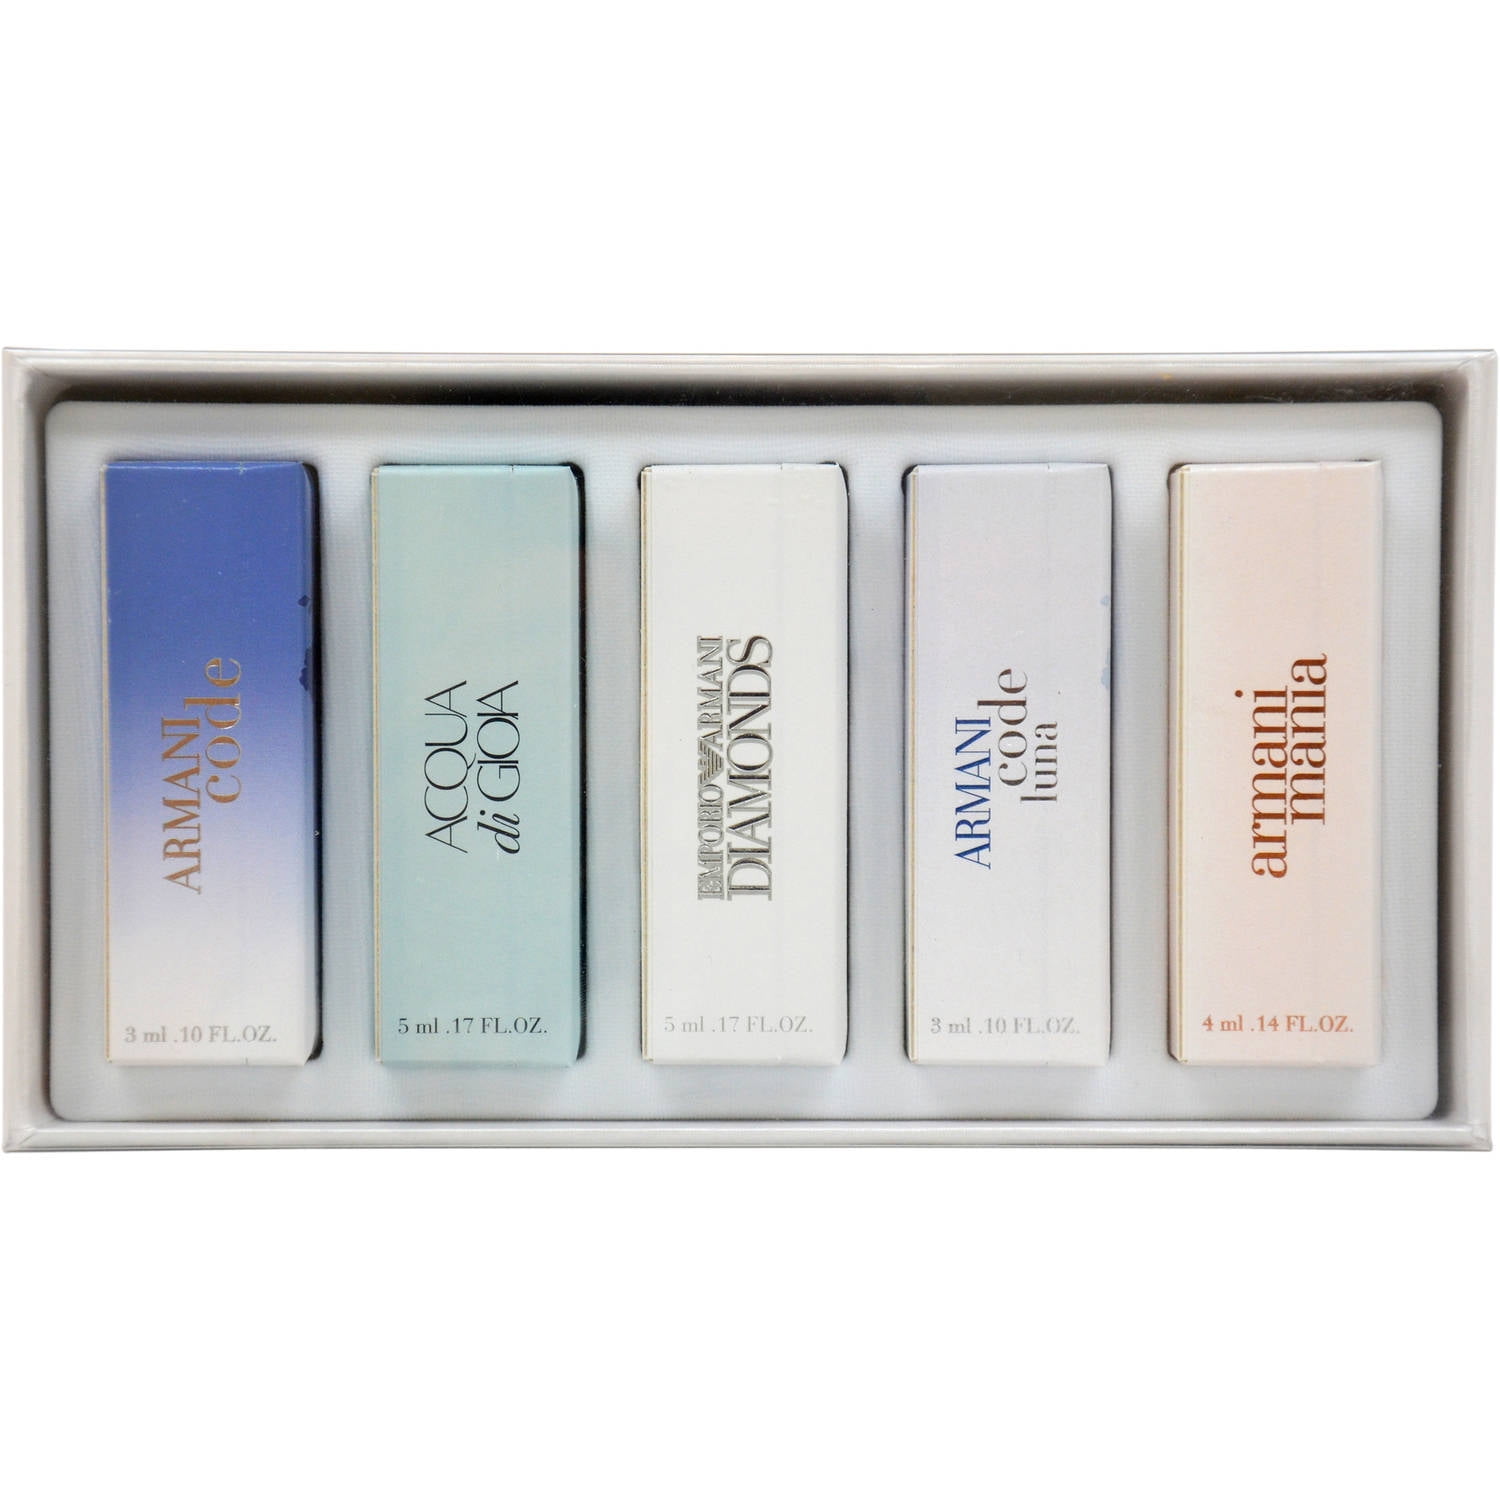 Giorgio Armani Variety Mini Gift Set, 5 pc 